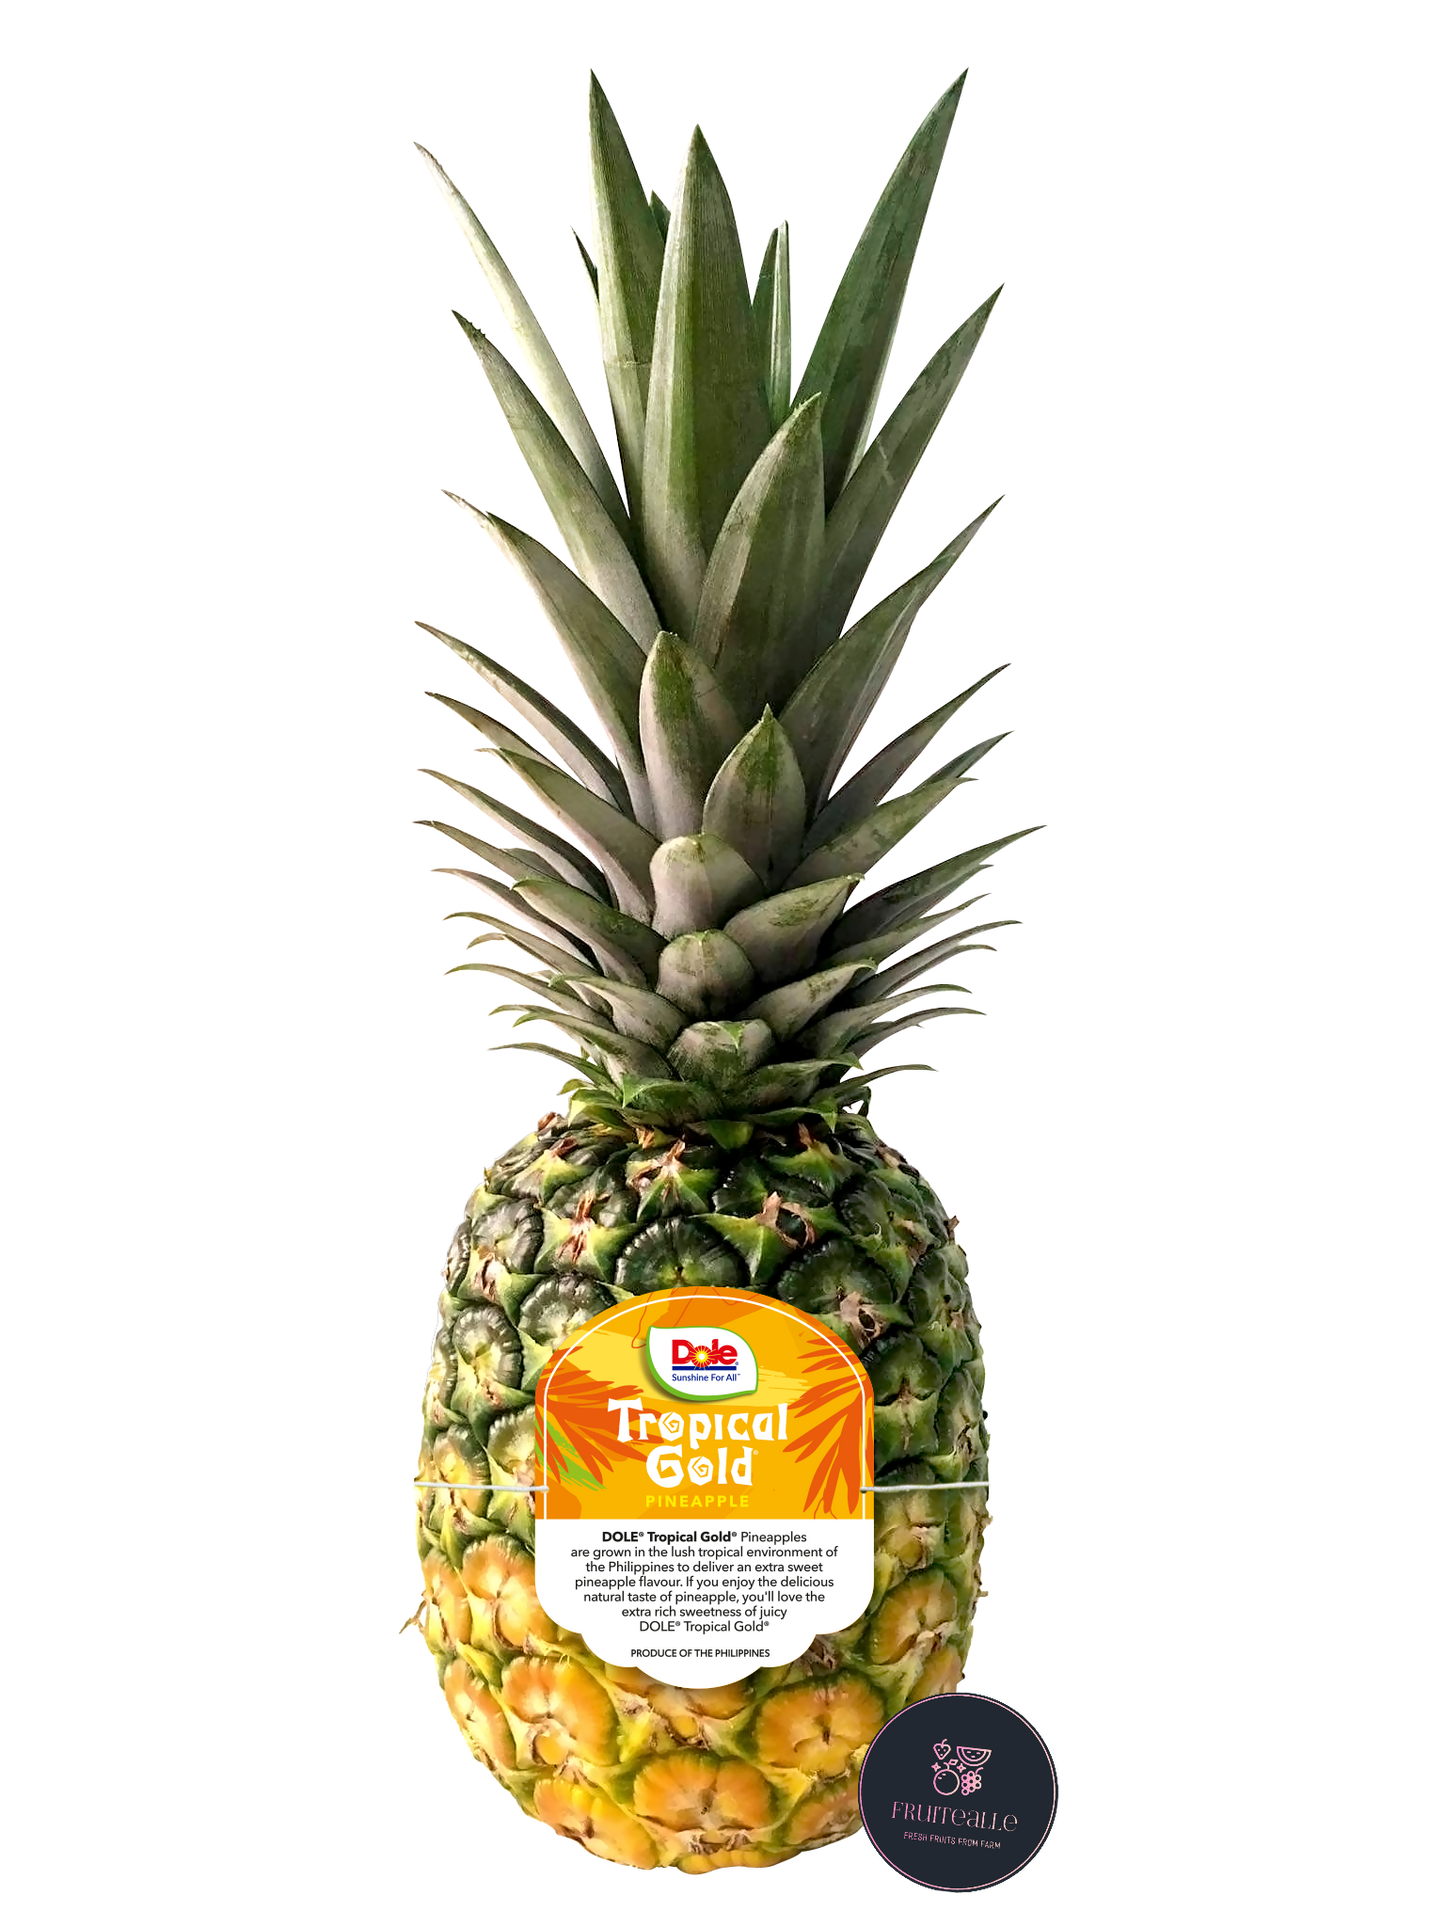 Pineapple - Dole Honey Gold MG3 Pineapple